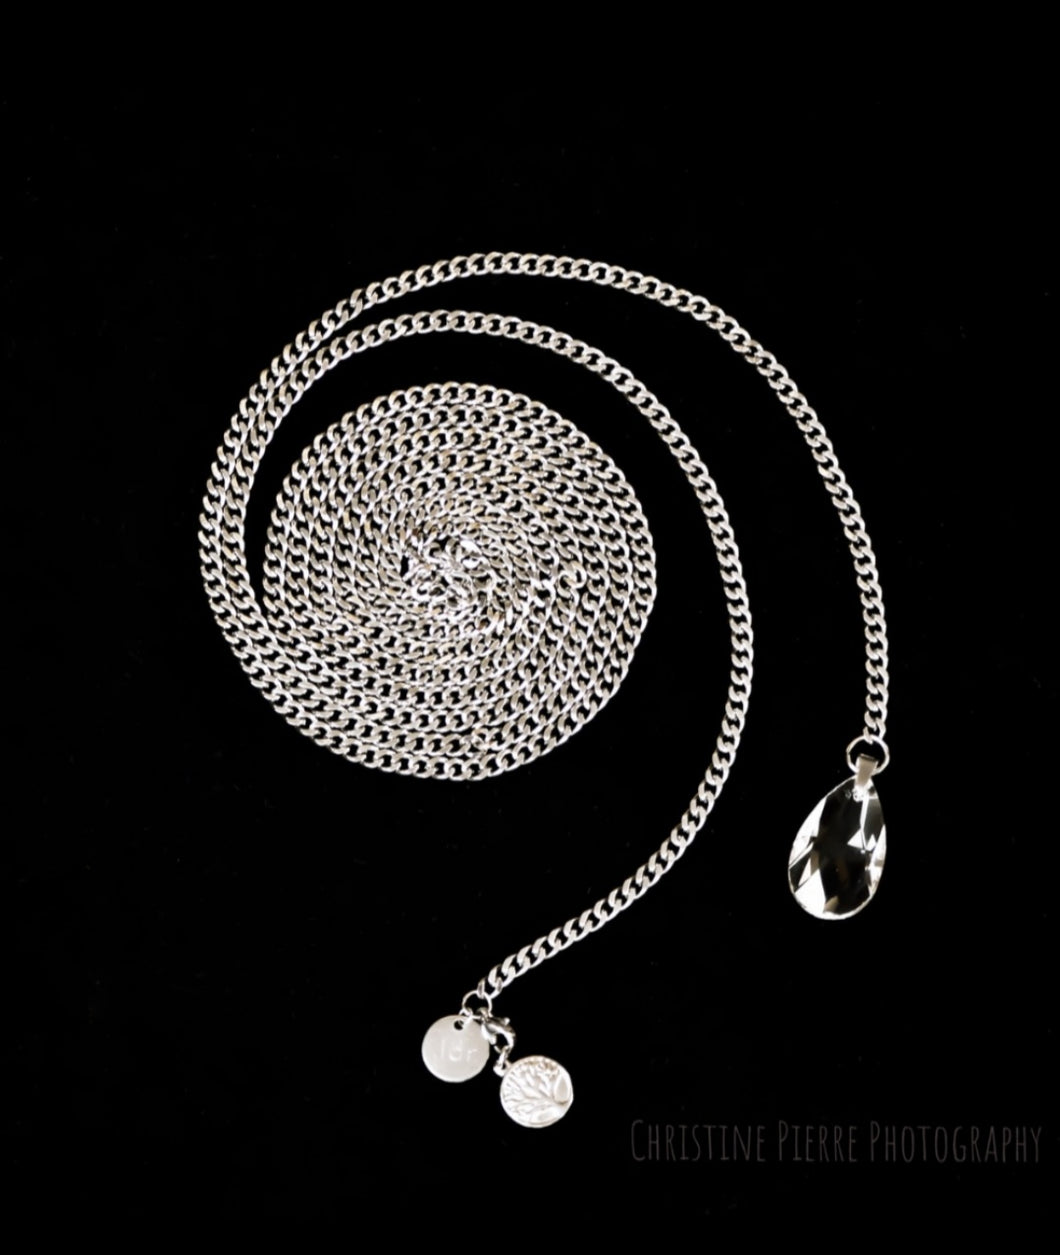 lit de roses - ldr glass teardrop/tree of life lariat chain necklace or bracelet - handmade jewellery - lit de roses